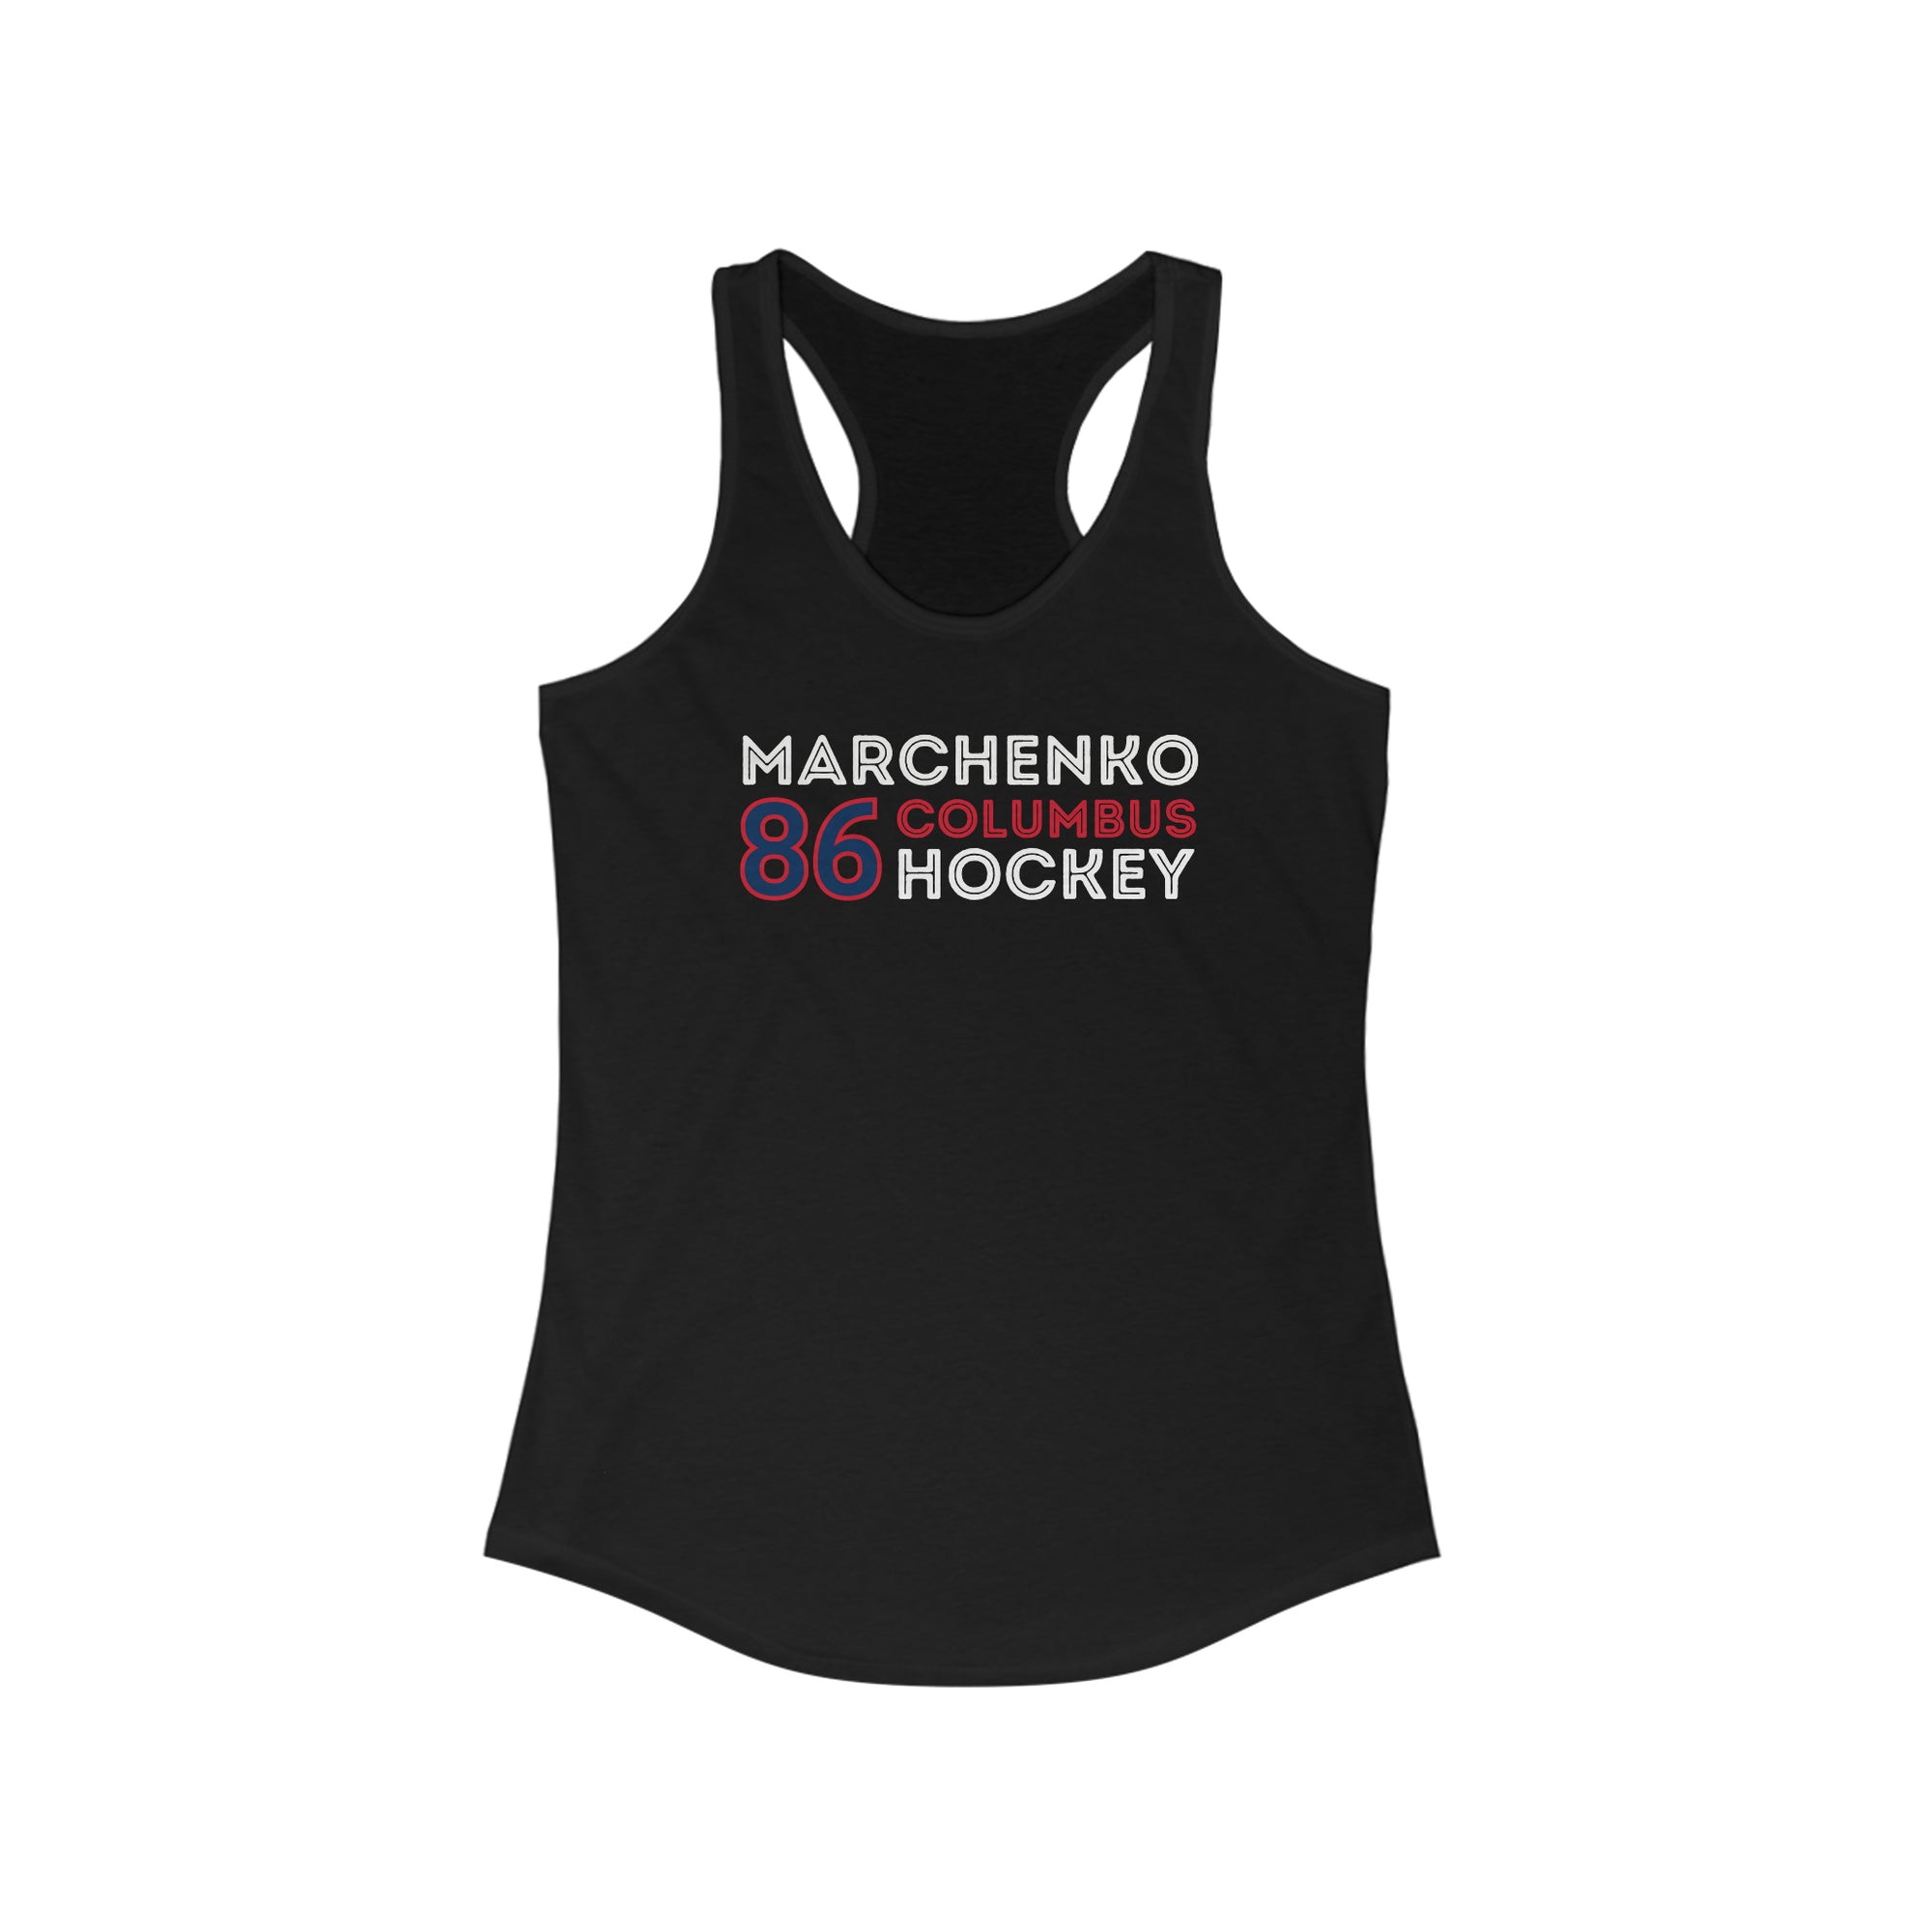 Marchenko 86 Columbus Hockey Grafitti Wall Design Women's Ideal Racerback Tank Top